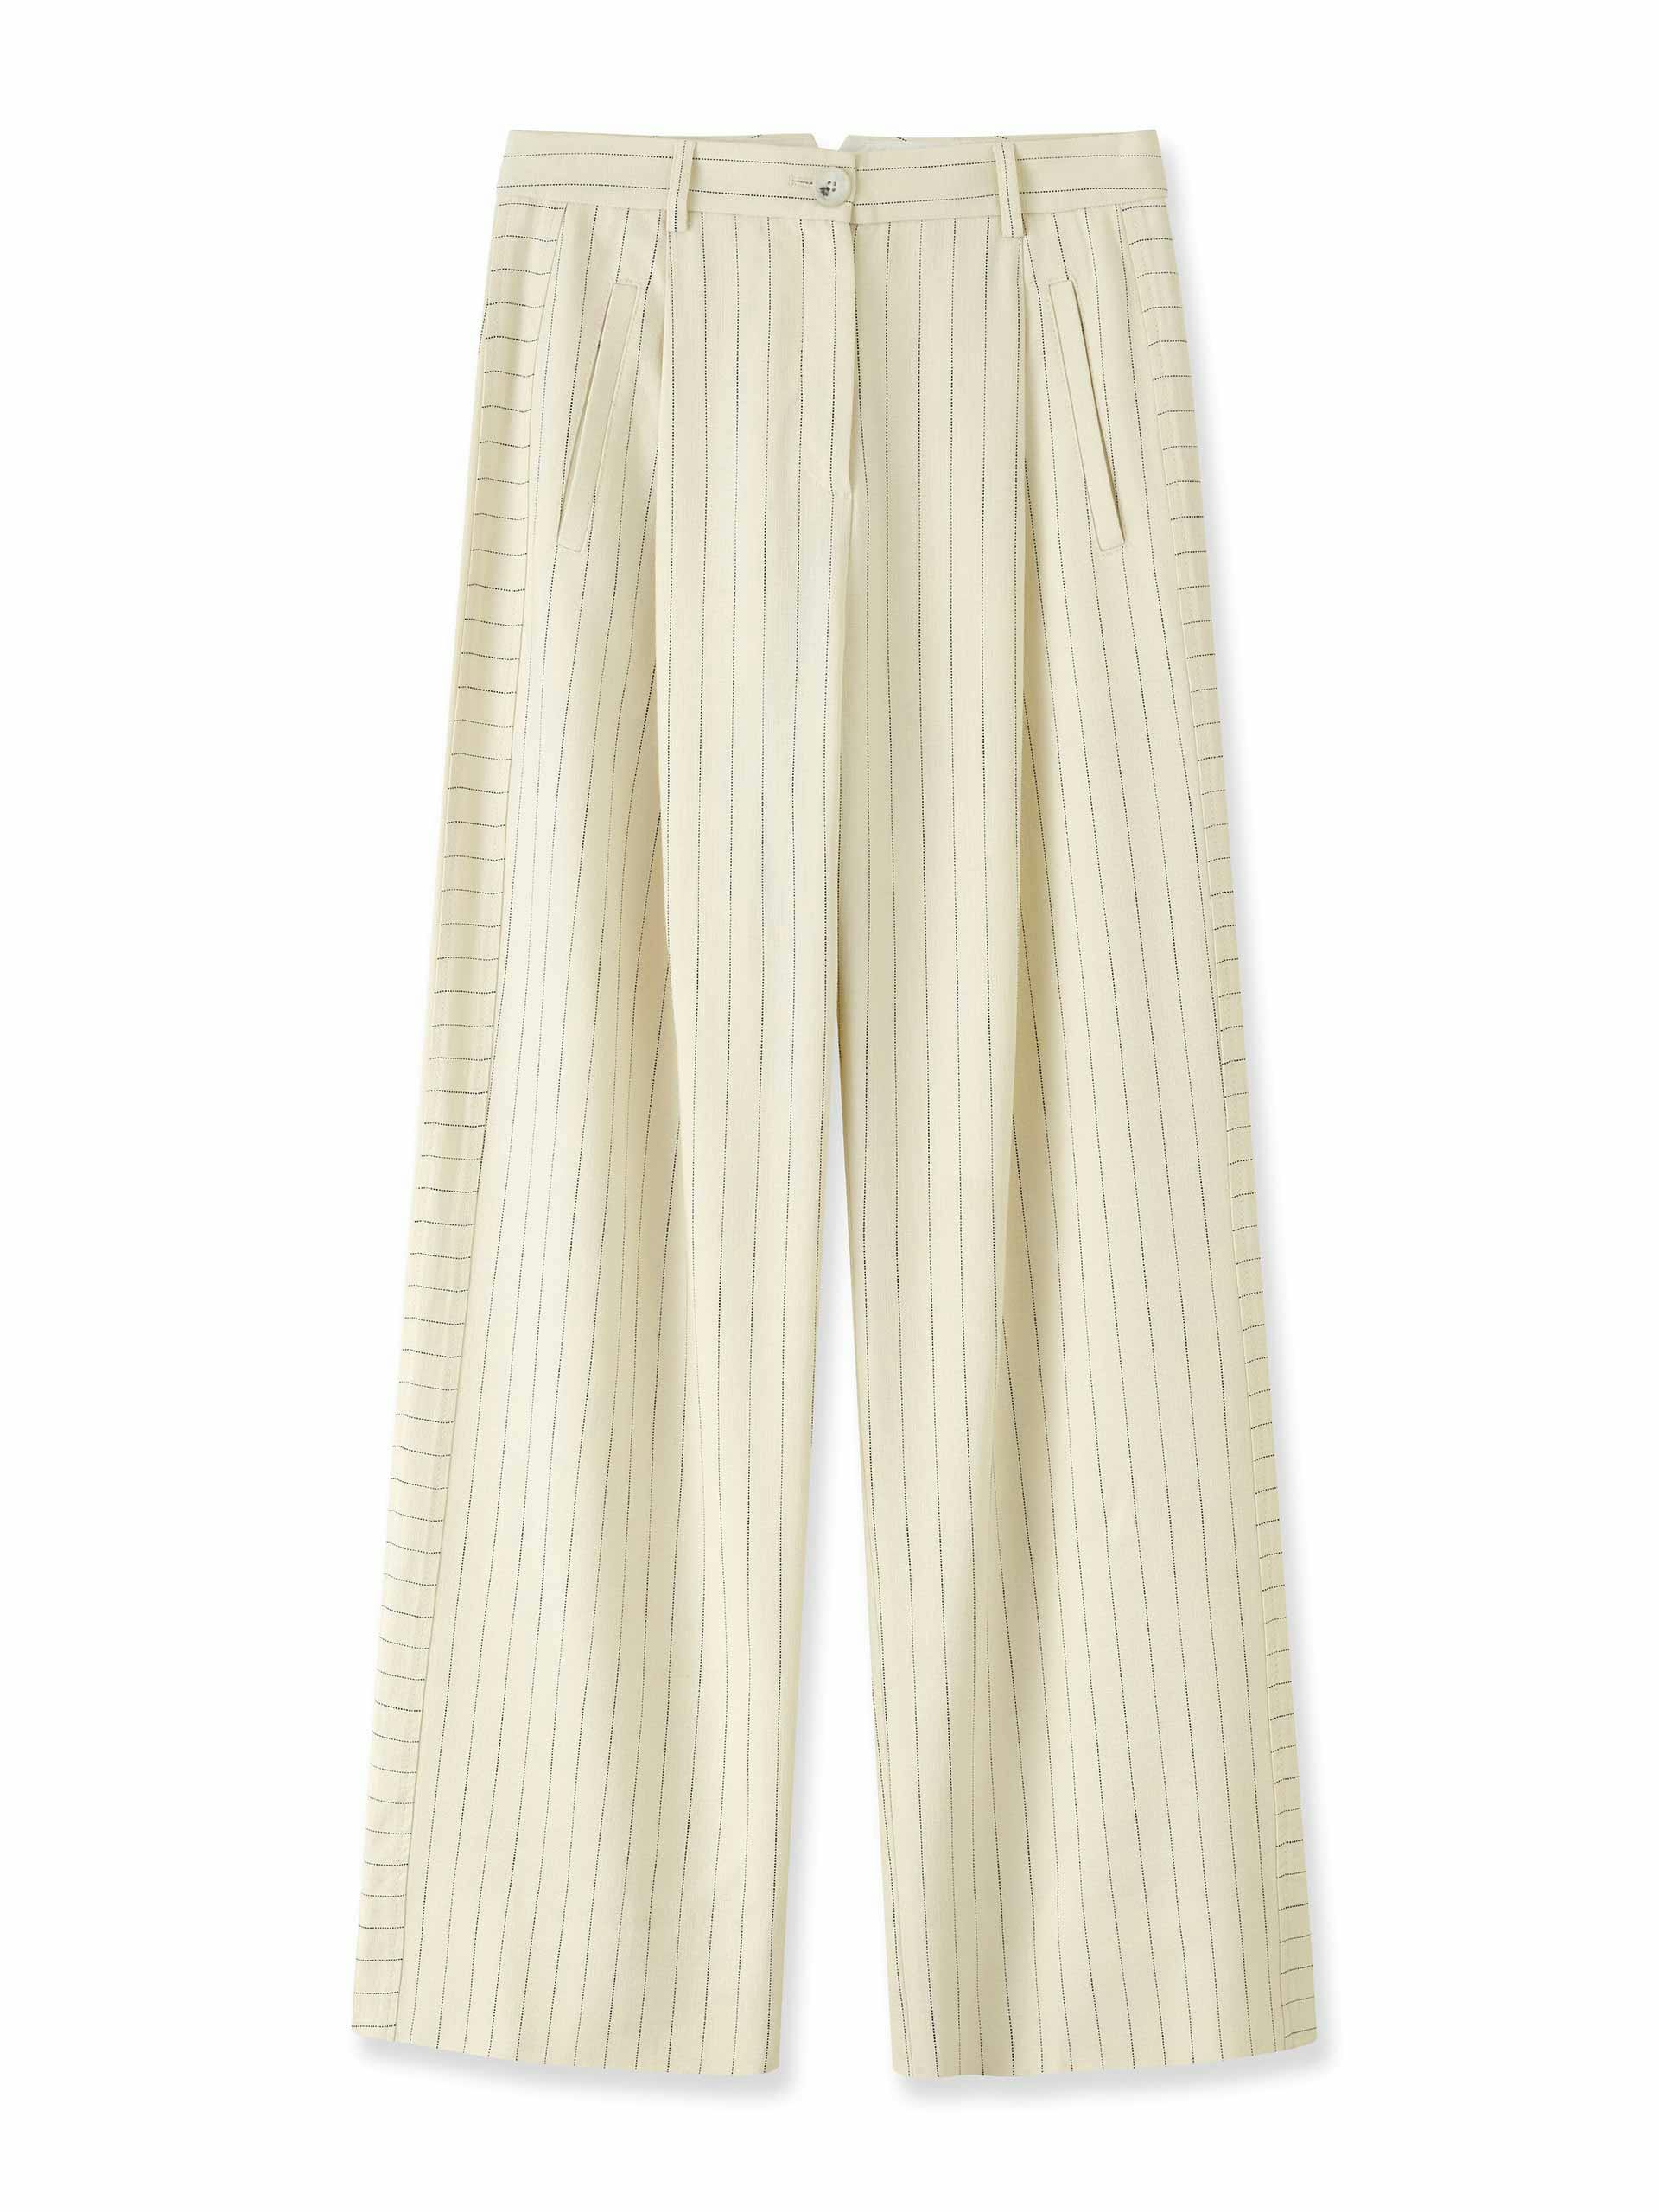 Cream pinstripe trousers